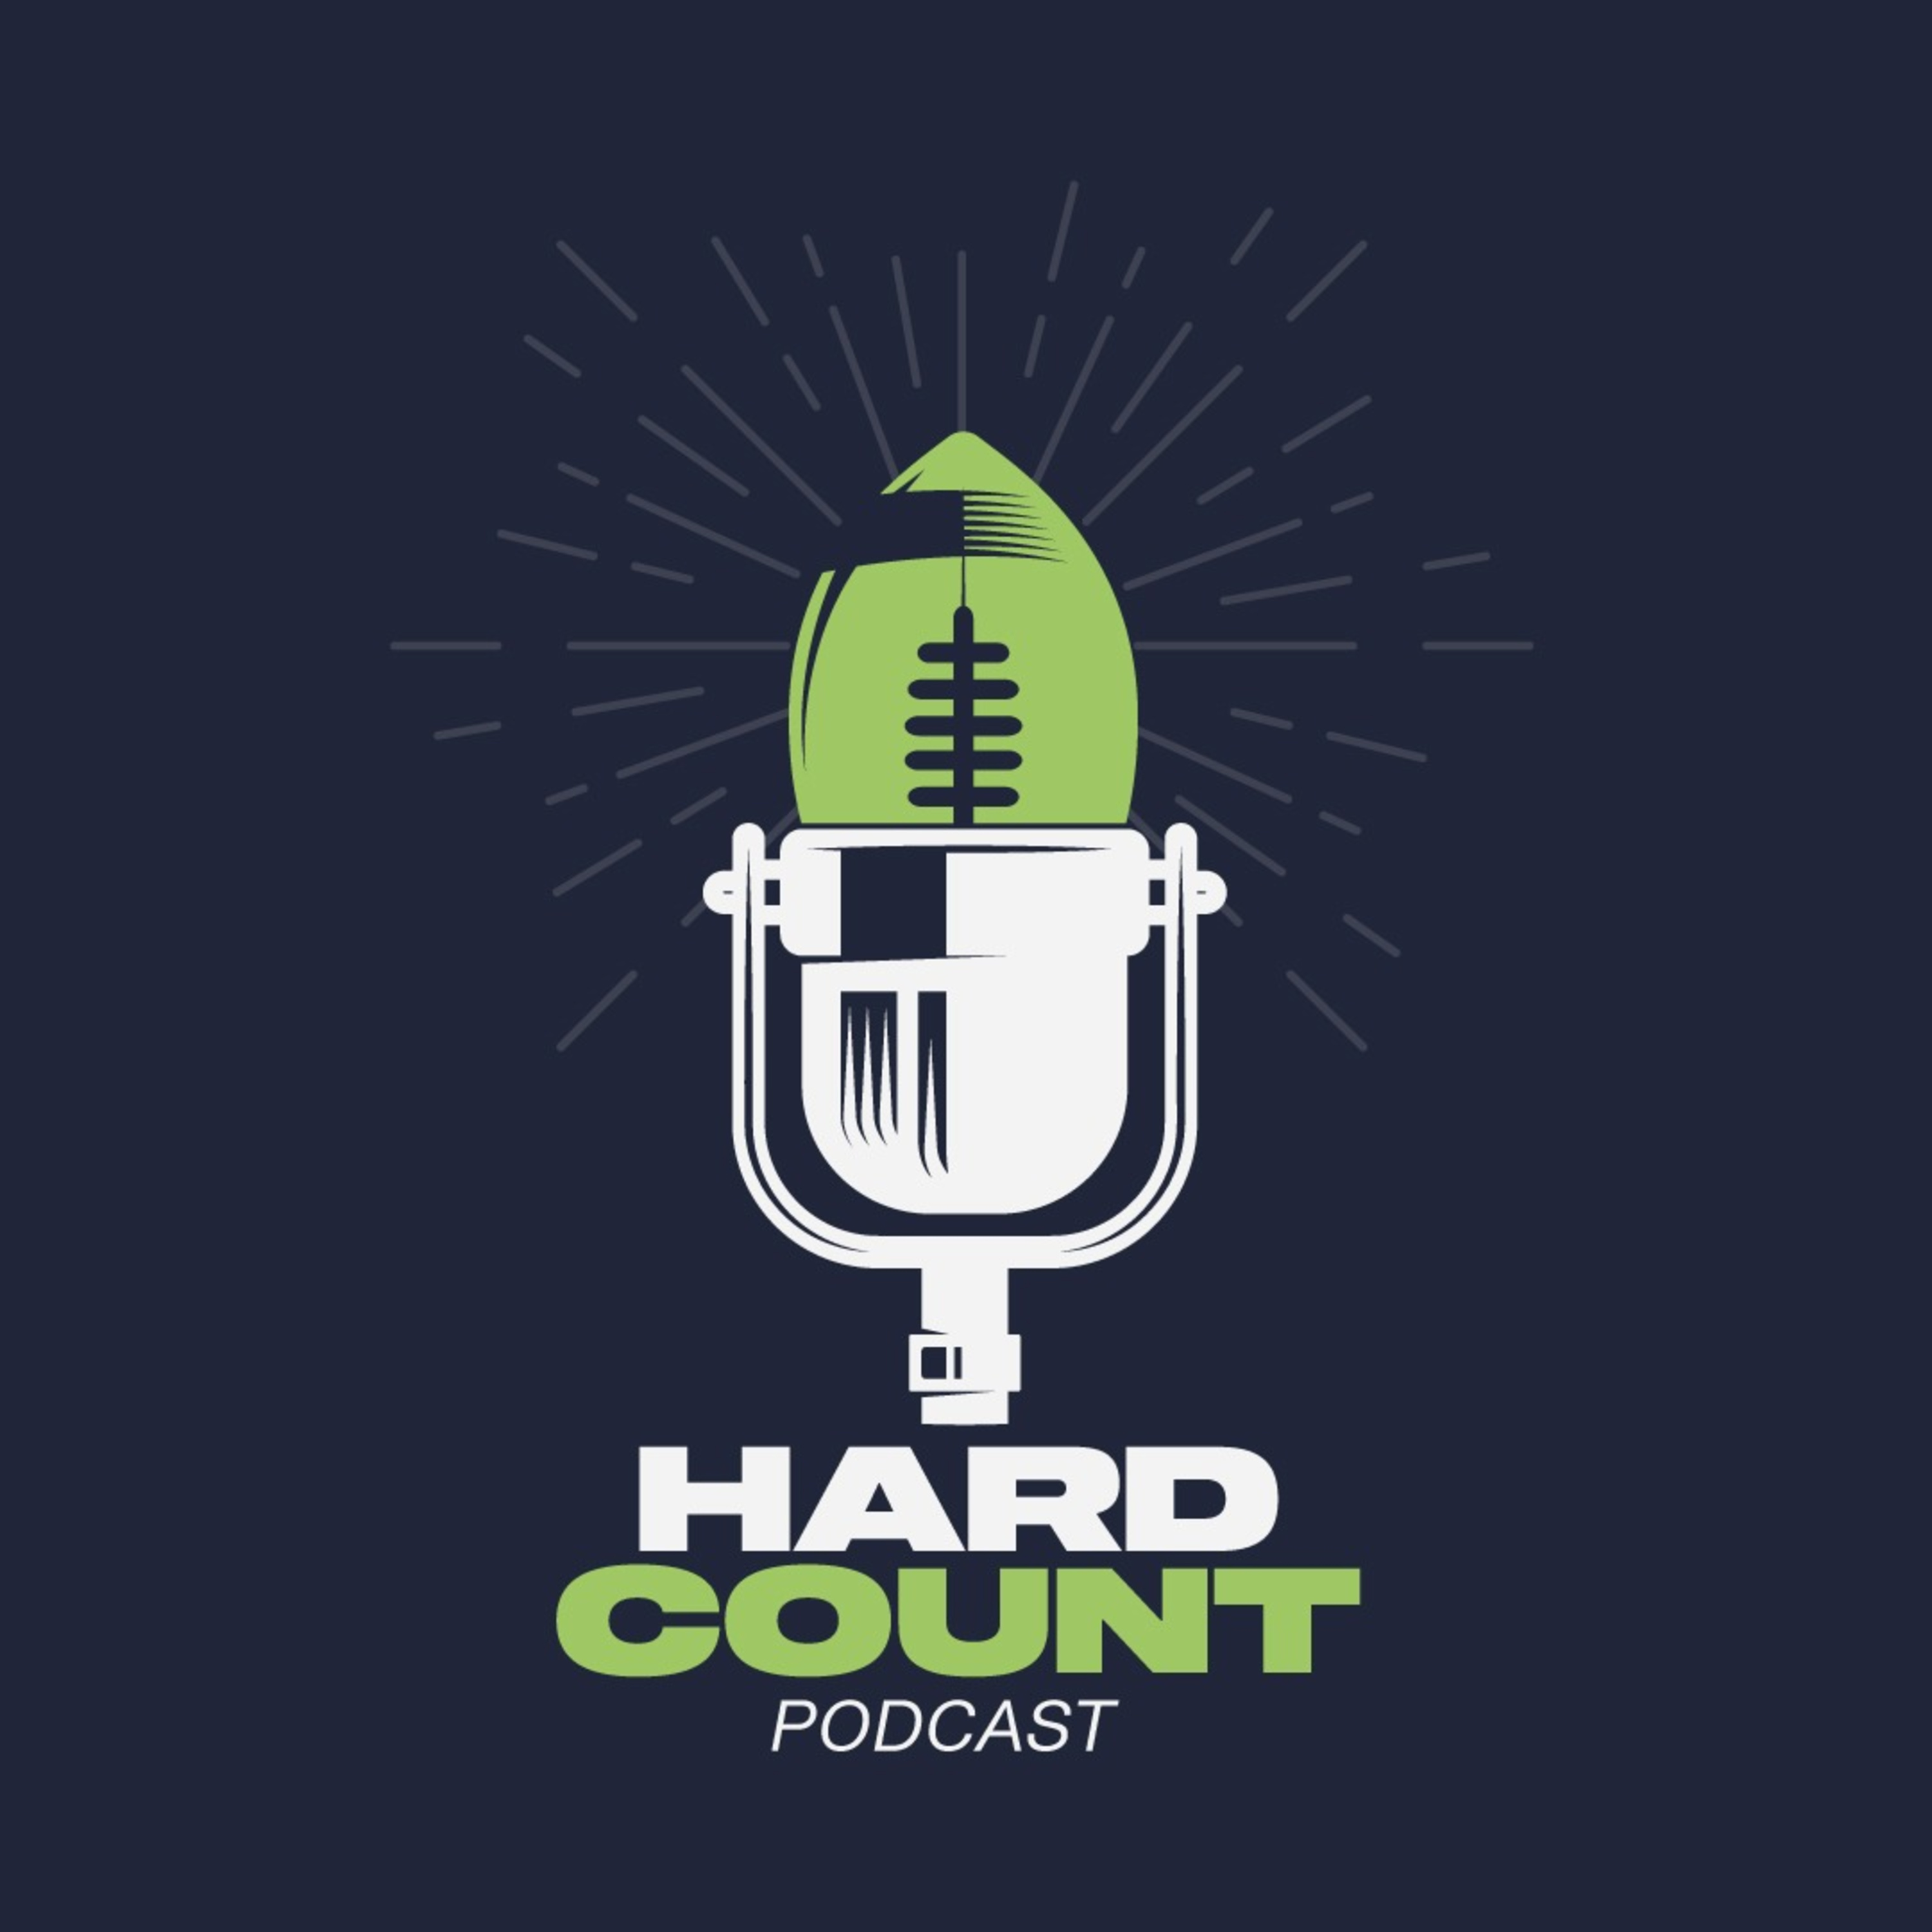 Hard Count Podcast - Episódio 158 - Franchise Tag e Dispensas